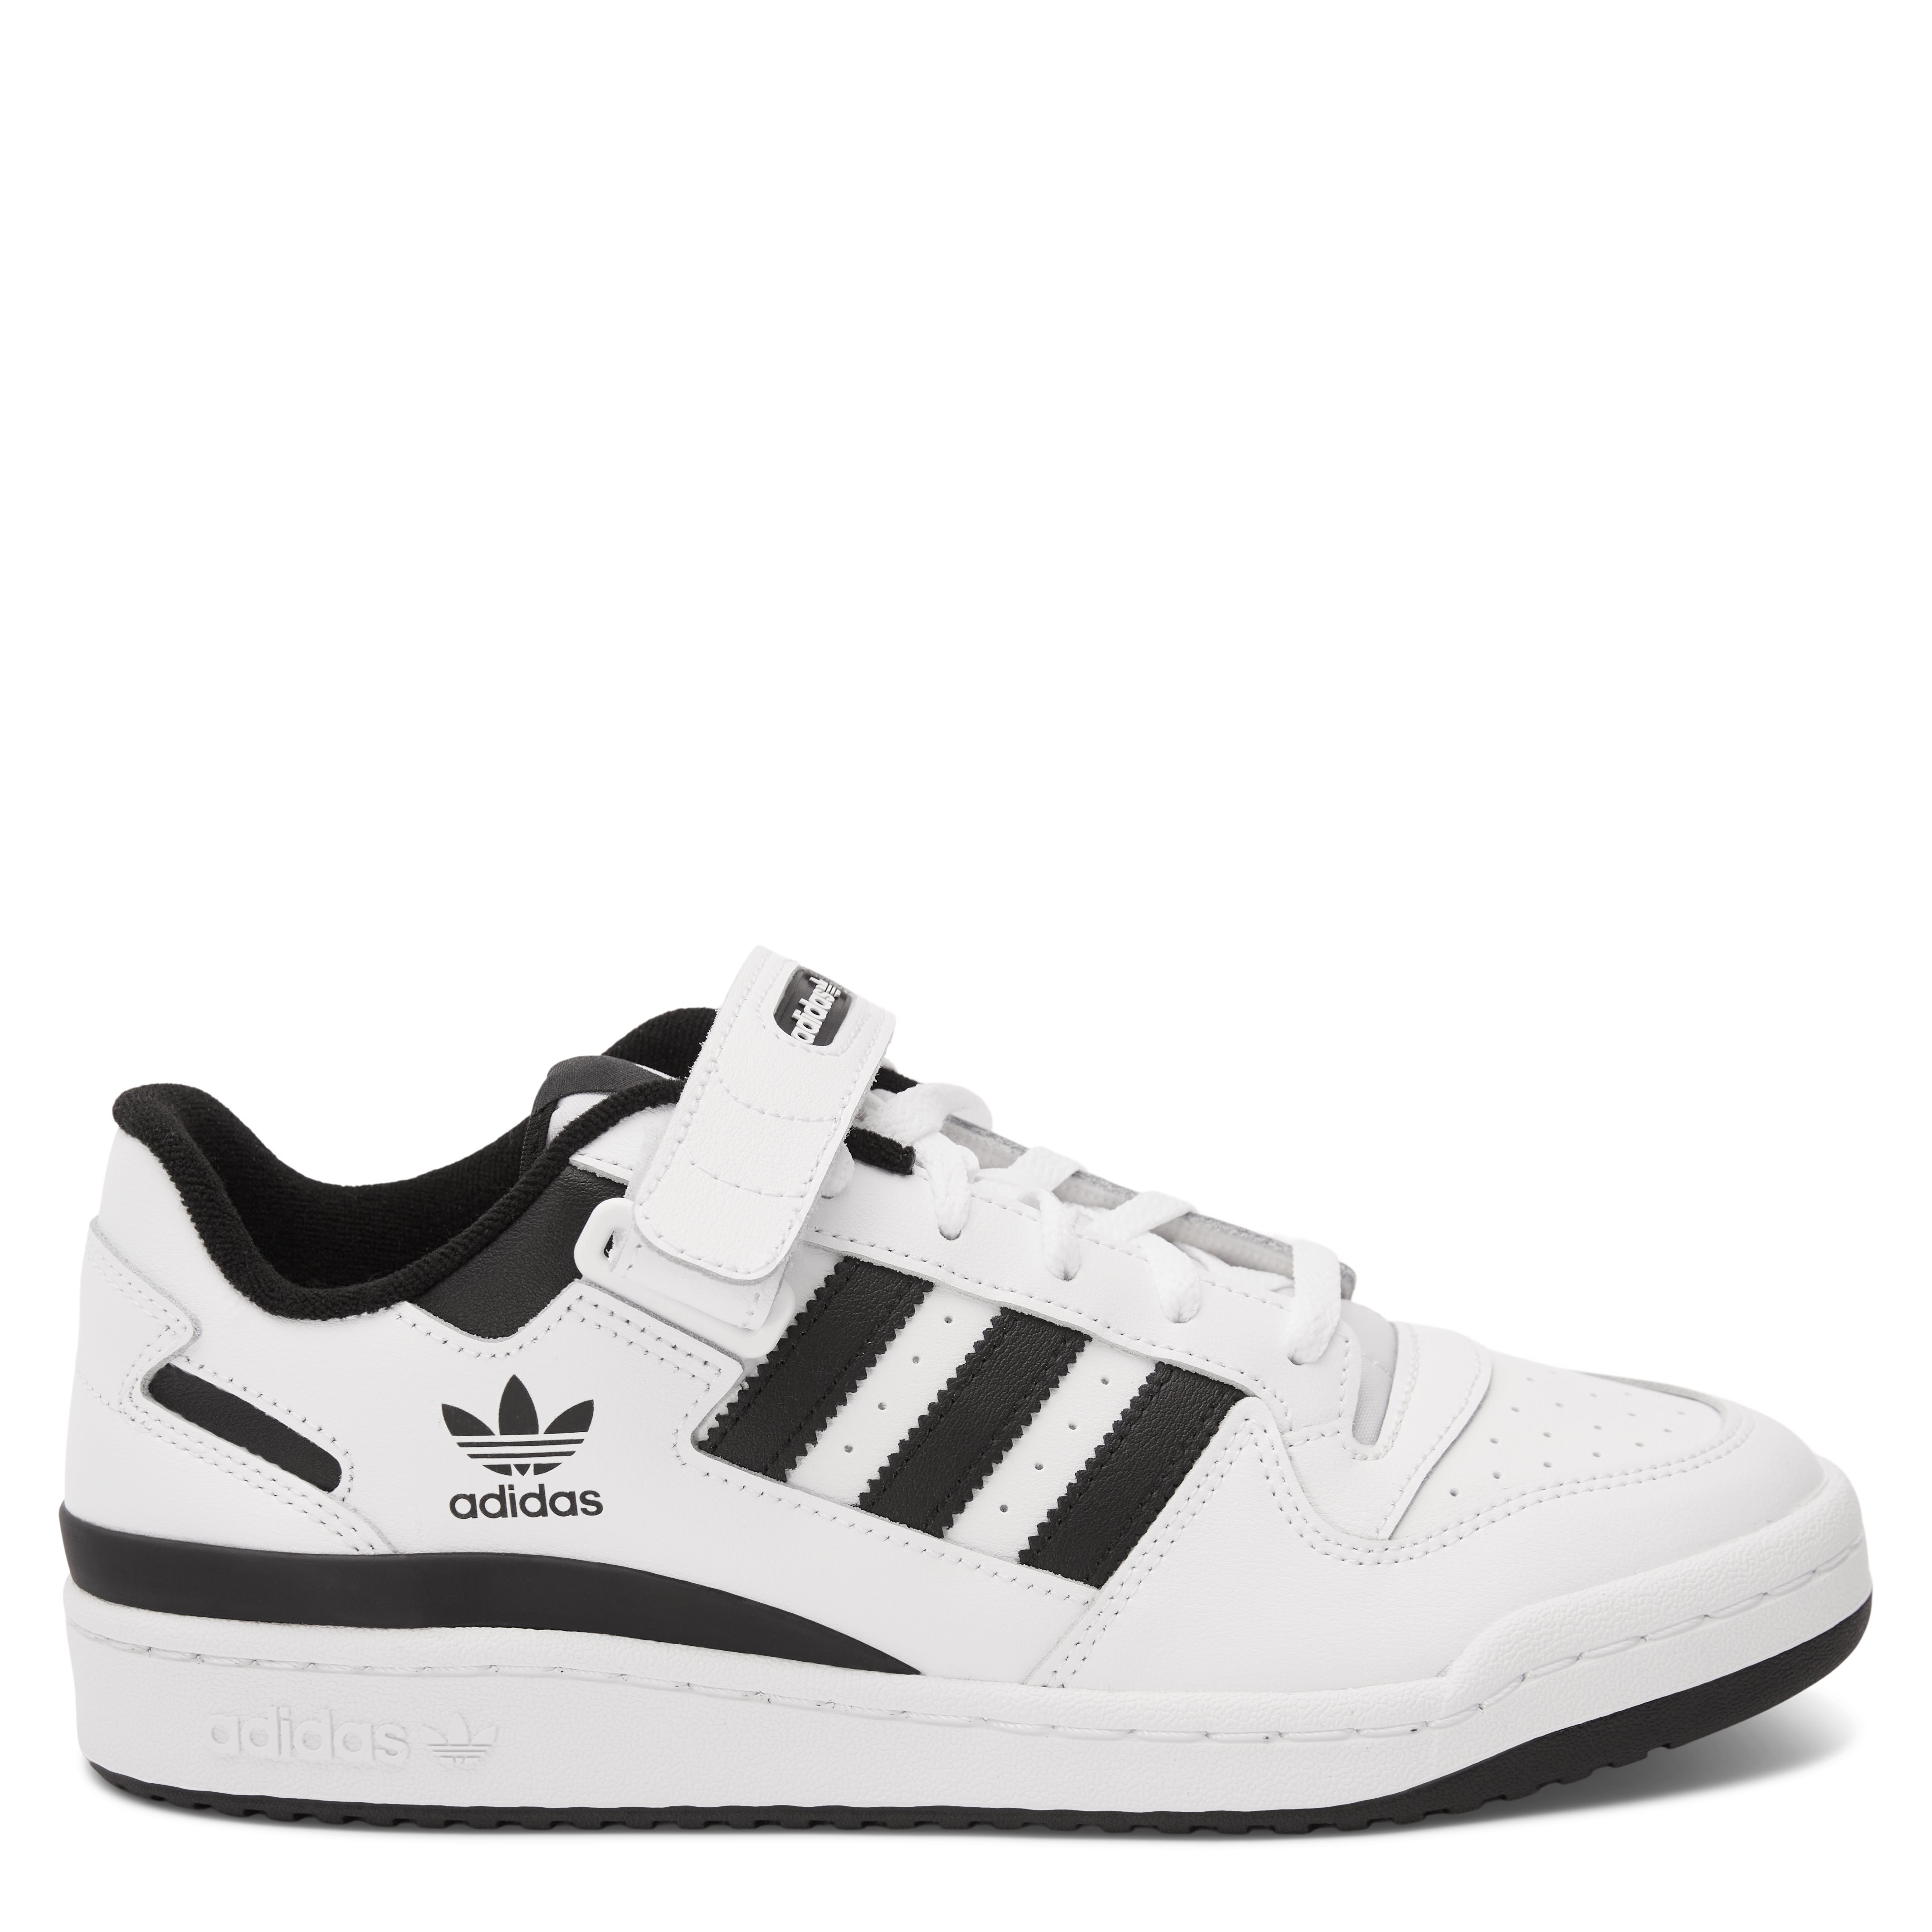 Adidas Originals Shoes FORUM LOW FY7757 White